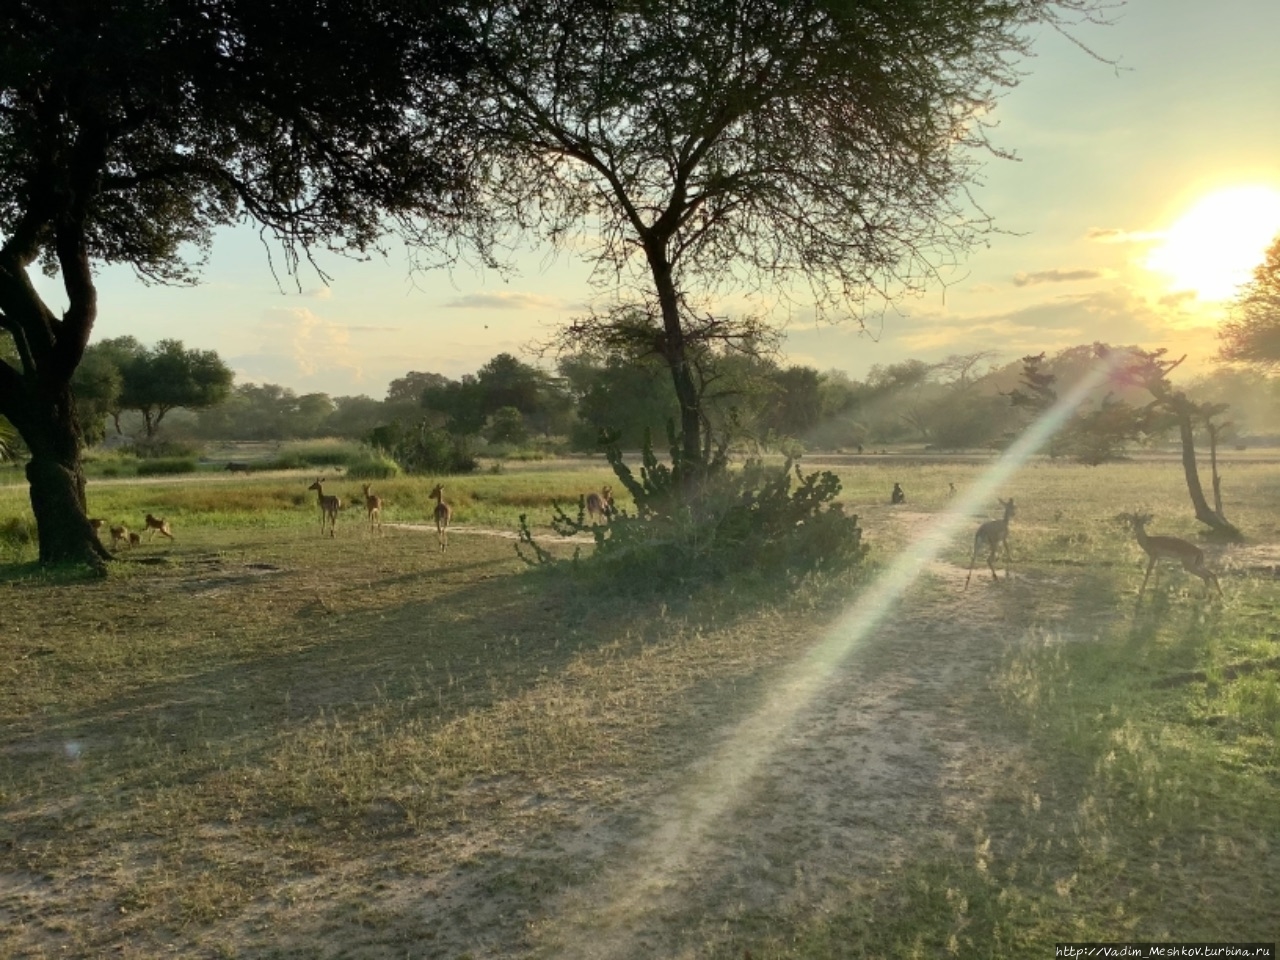 Рассвет в саванне Заказник Селус, Танзания